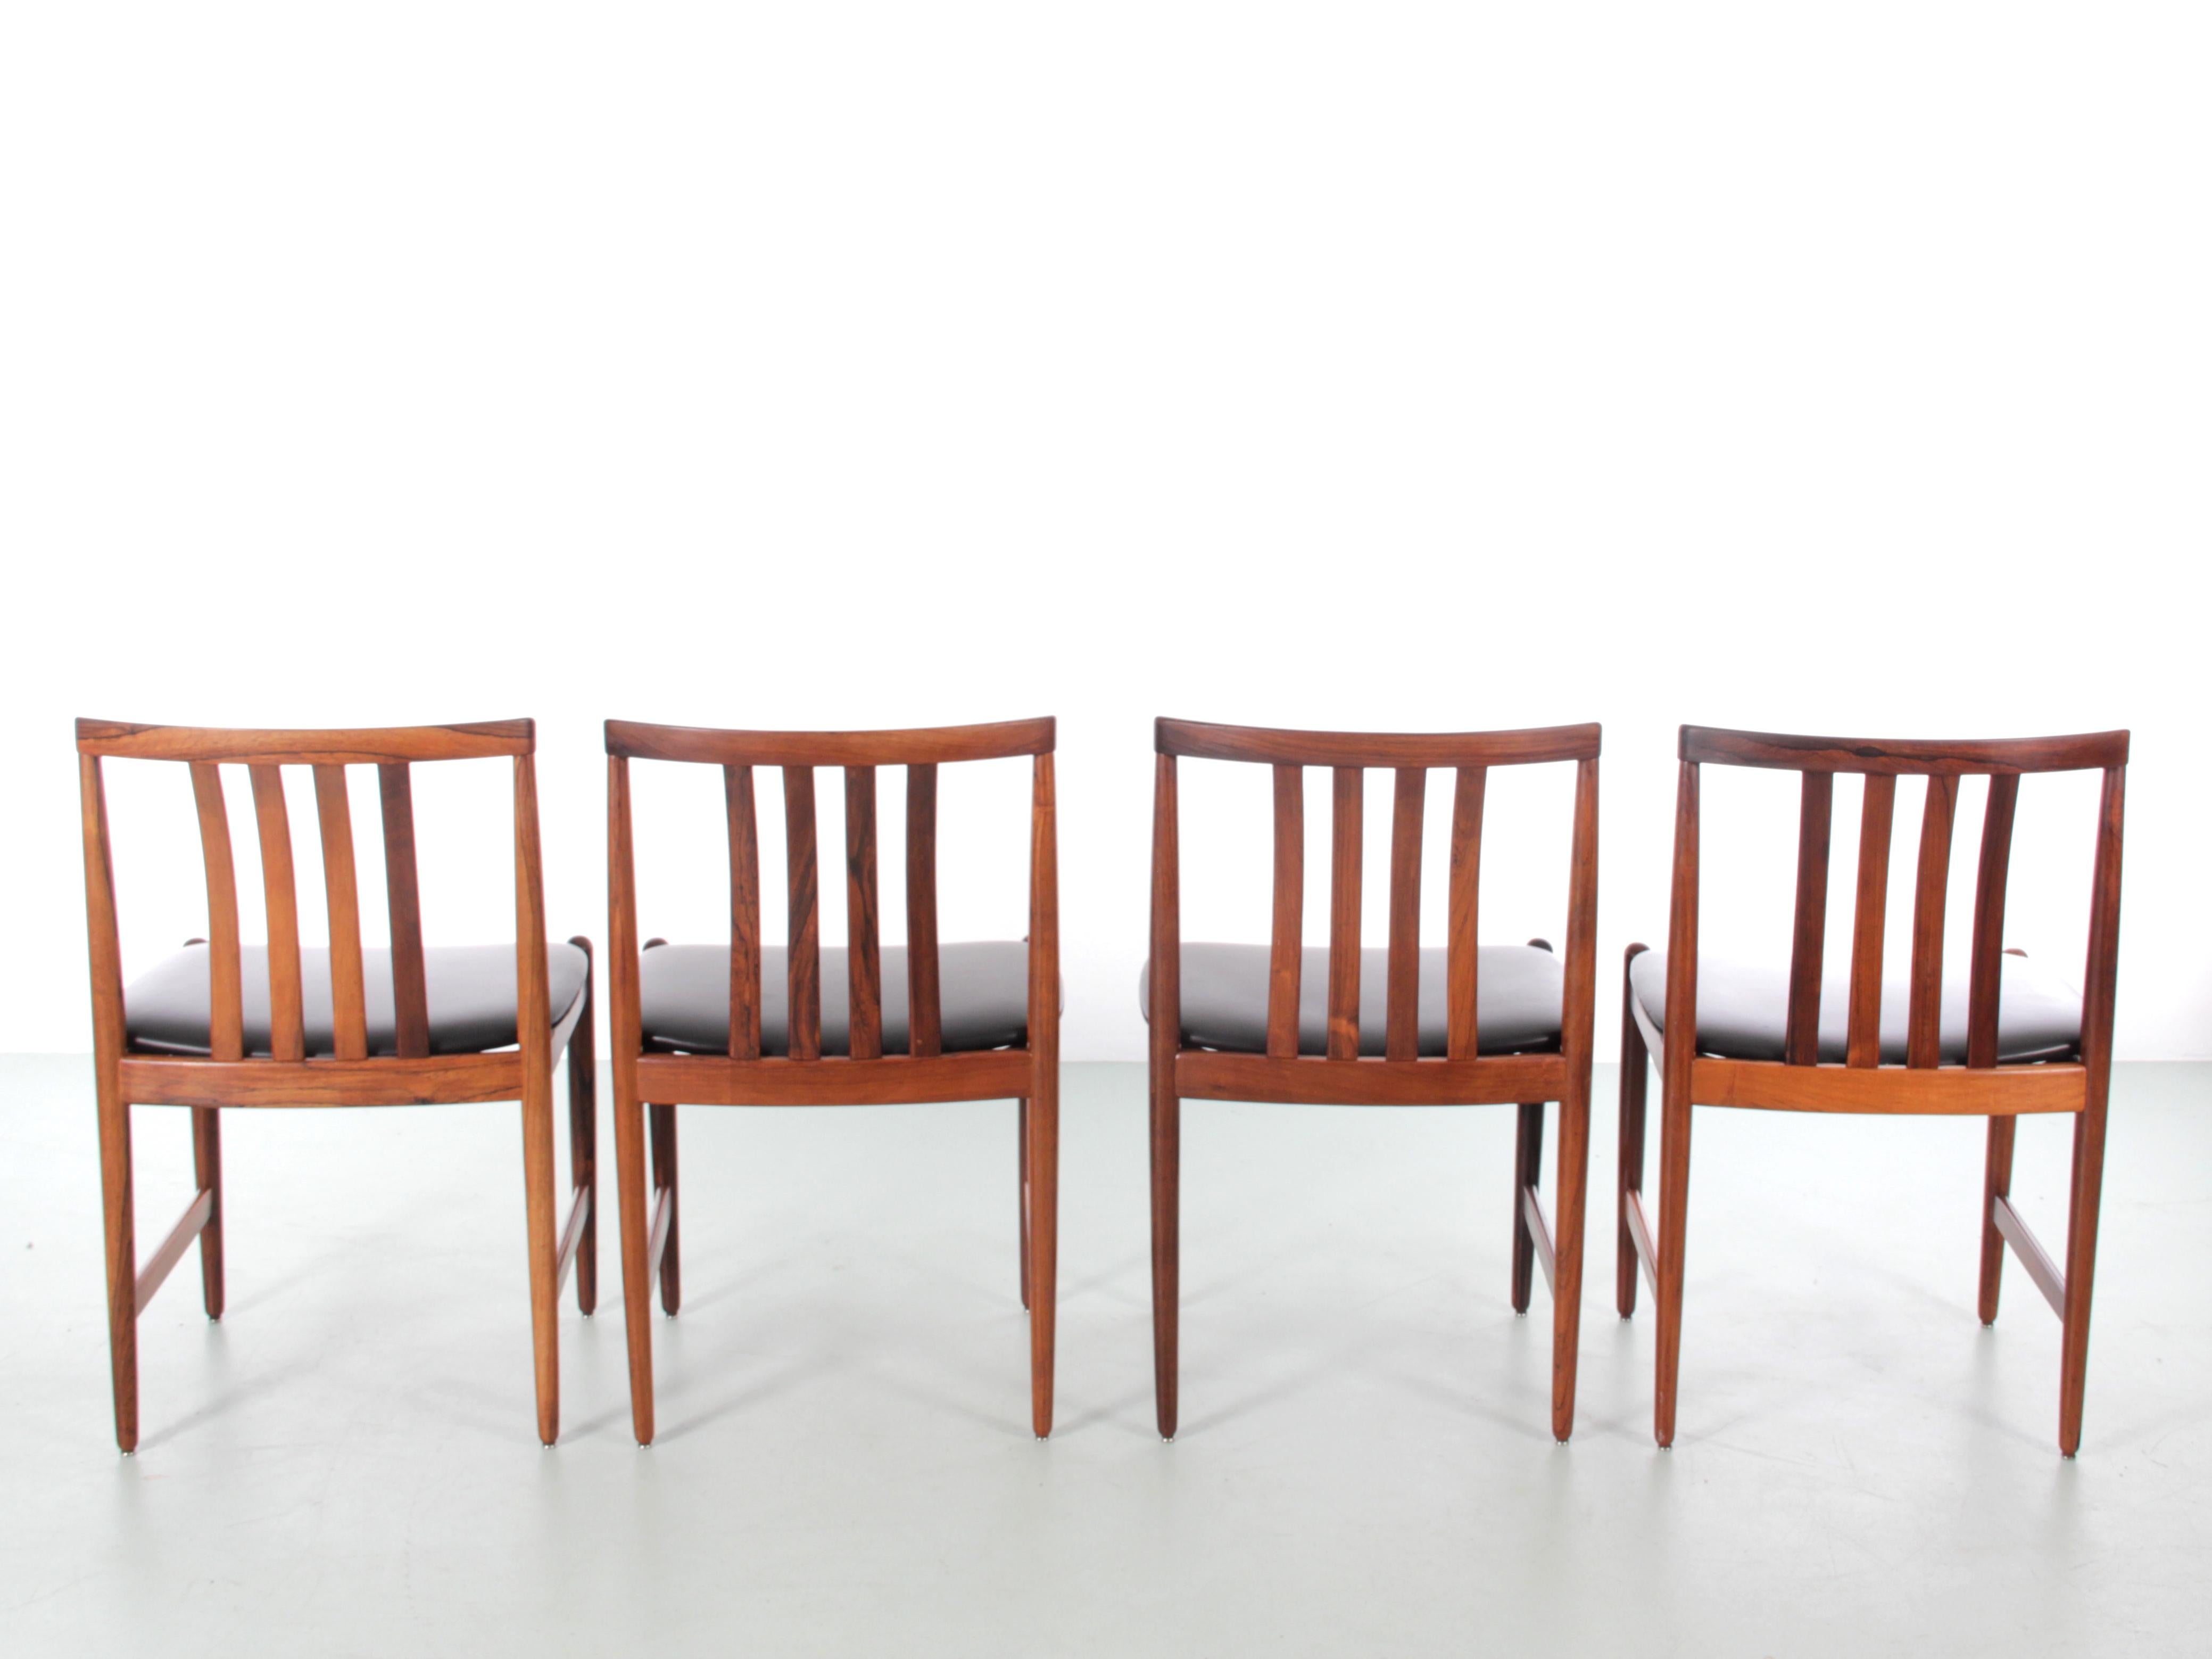 Mid-Century Modern set of 4 dining chairs in rosewood by Westnofa, original leather seat. Wonderfull rosewood grain.